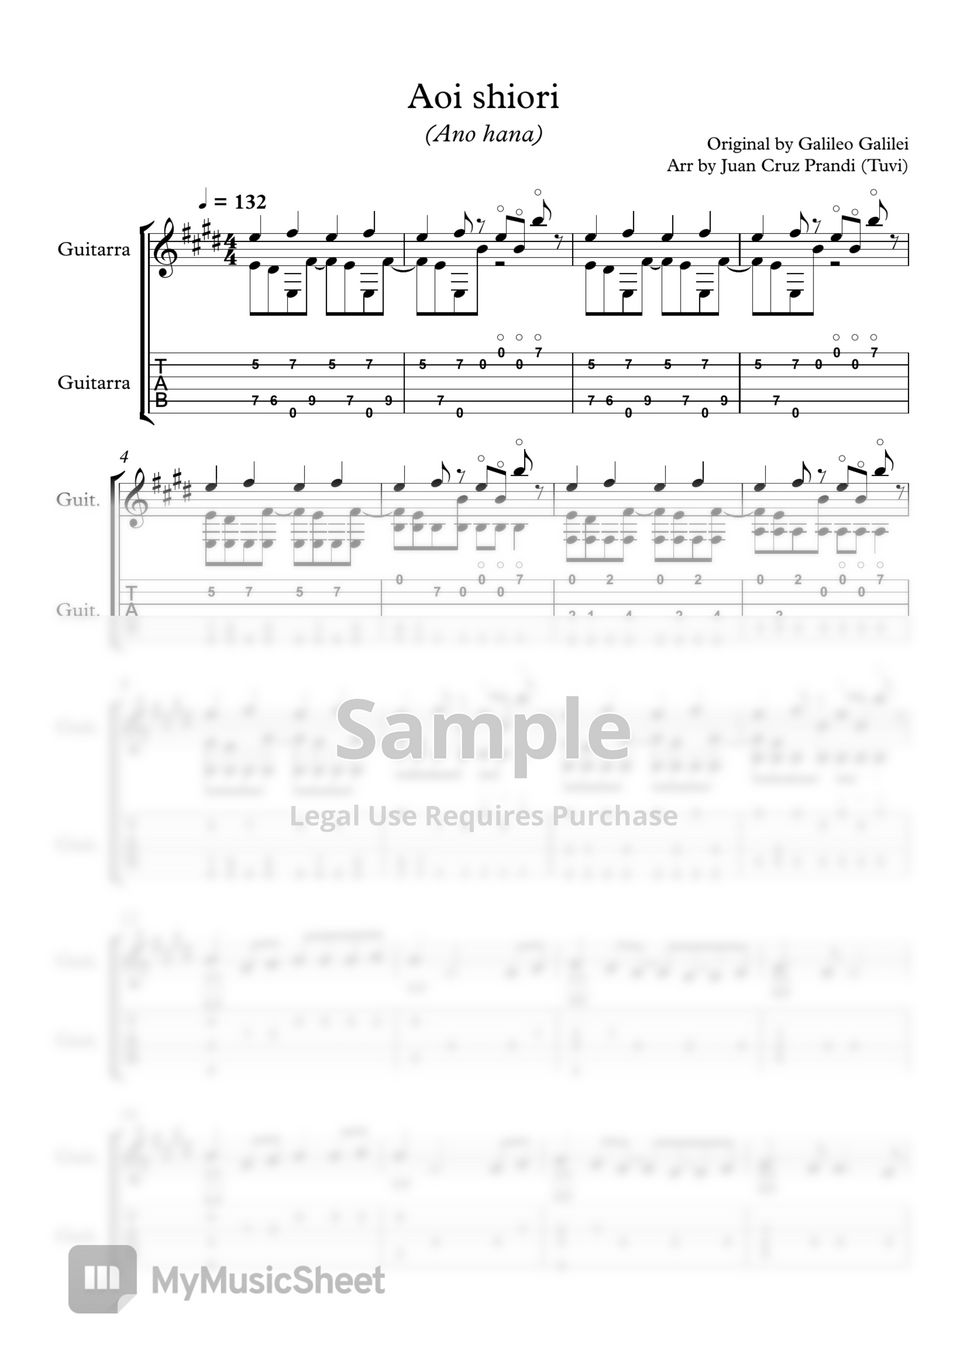 Galileo Galilei - Aoi shiroi (Classical guitar/Guitar cover) by Tuvi_guitar